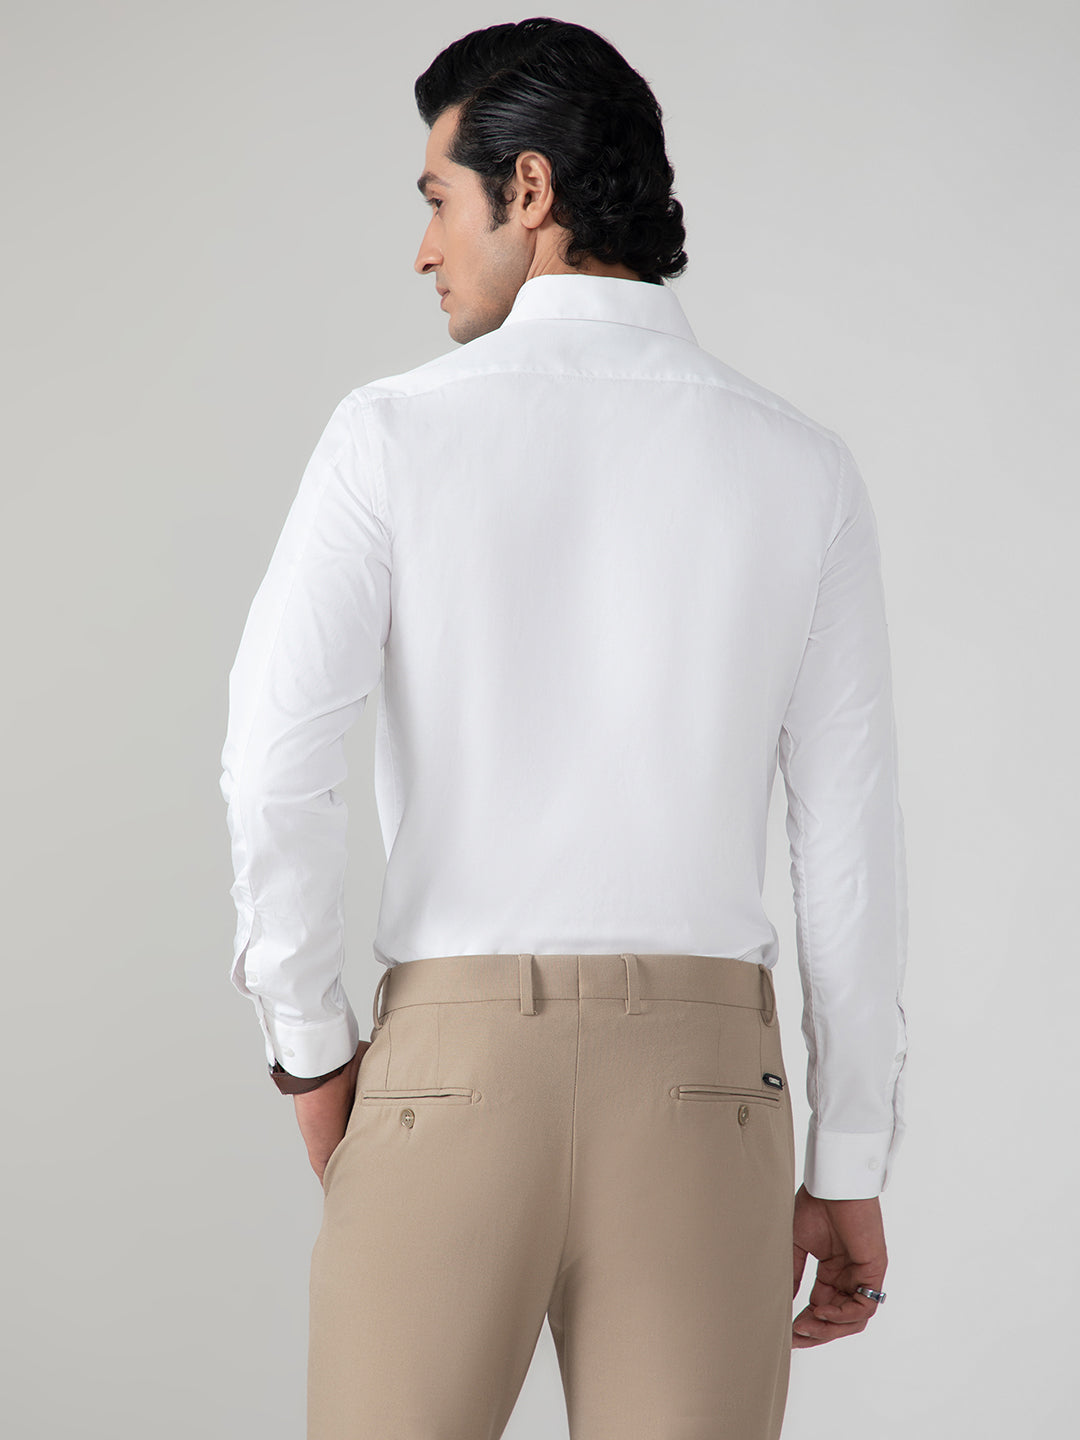 Cotton Lycra Formal Shirt in White- Slim Fit